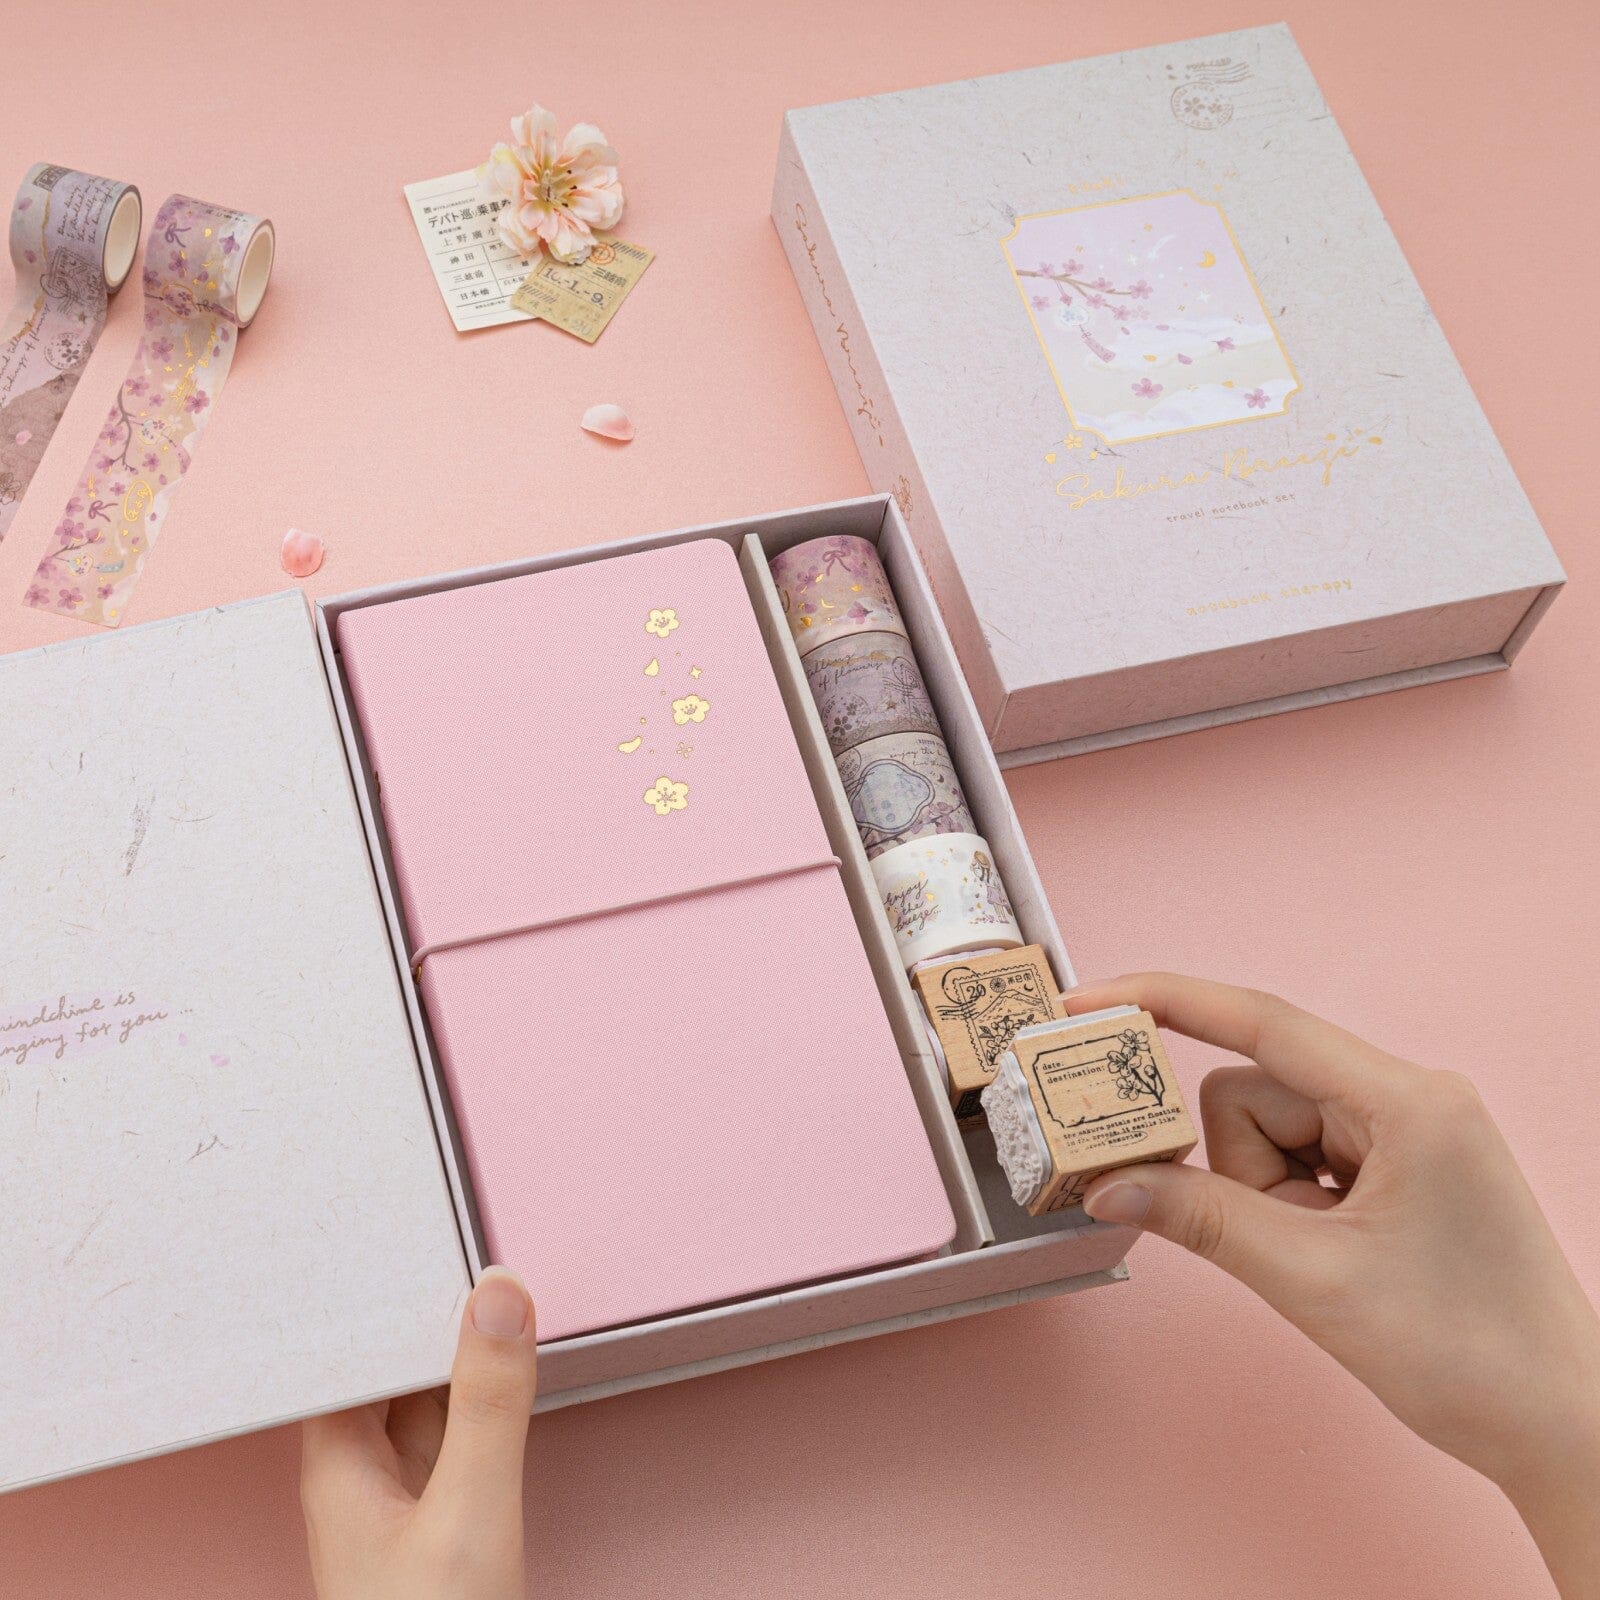 Gift Card Digital - Blossom & Book – Blossom and Book